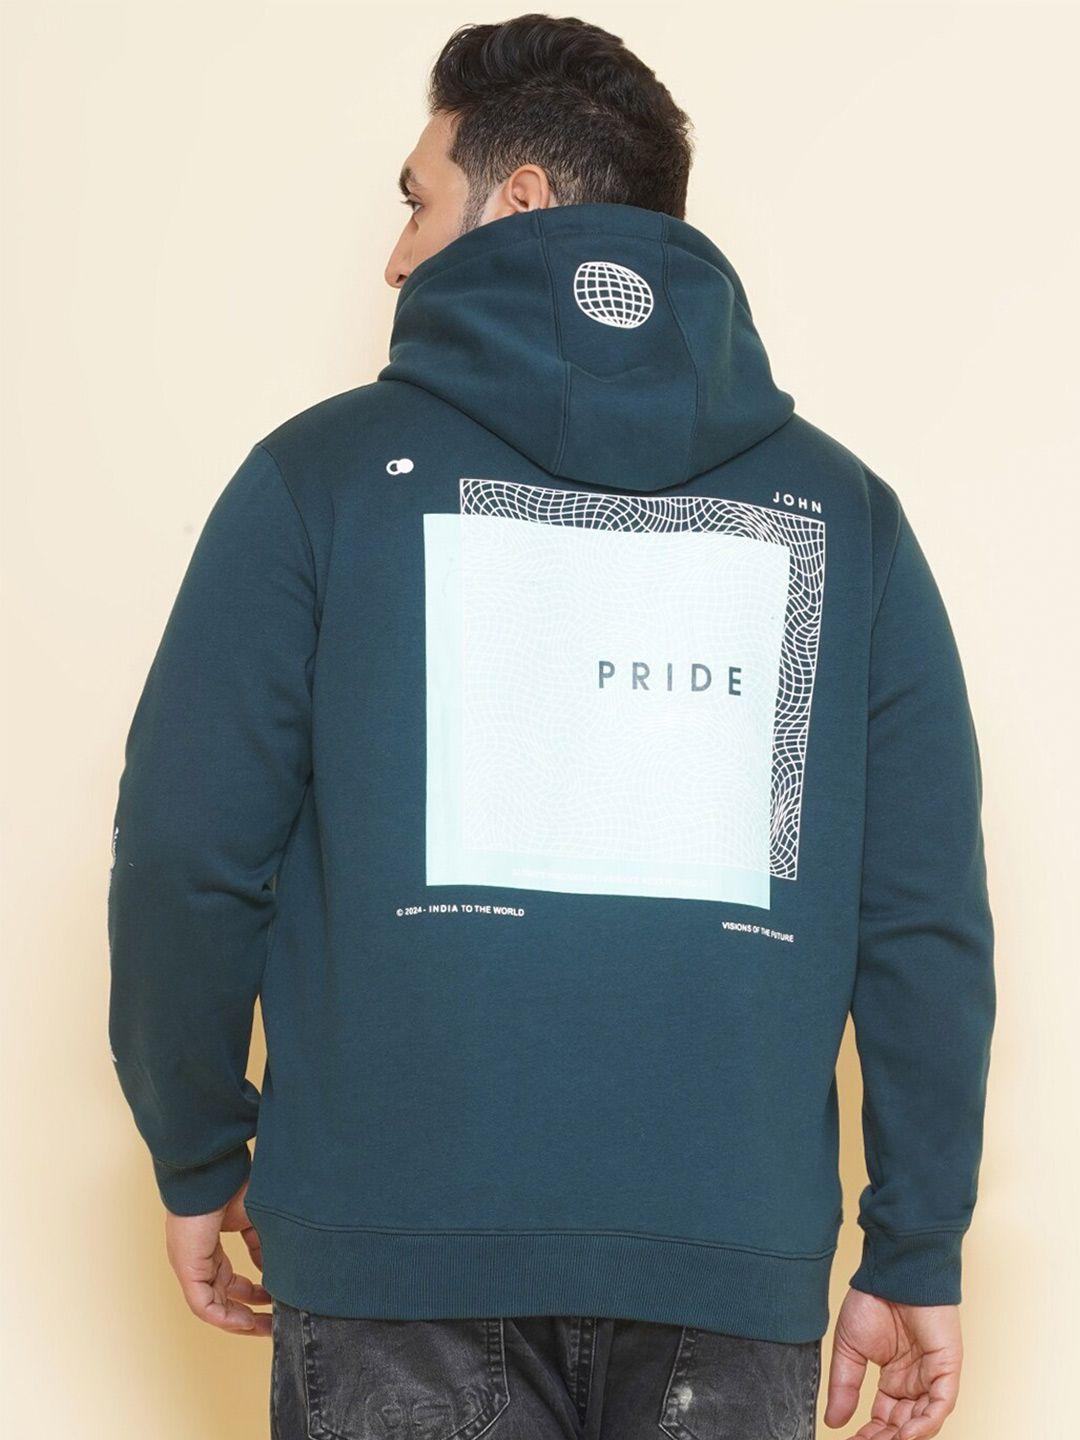 john pride plus size geometric printed hooded fleece pullover sweatshirt